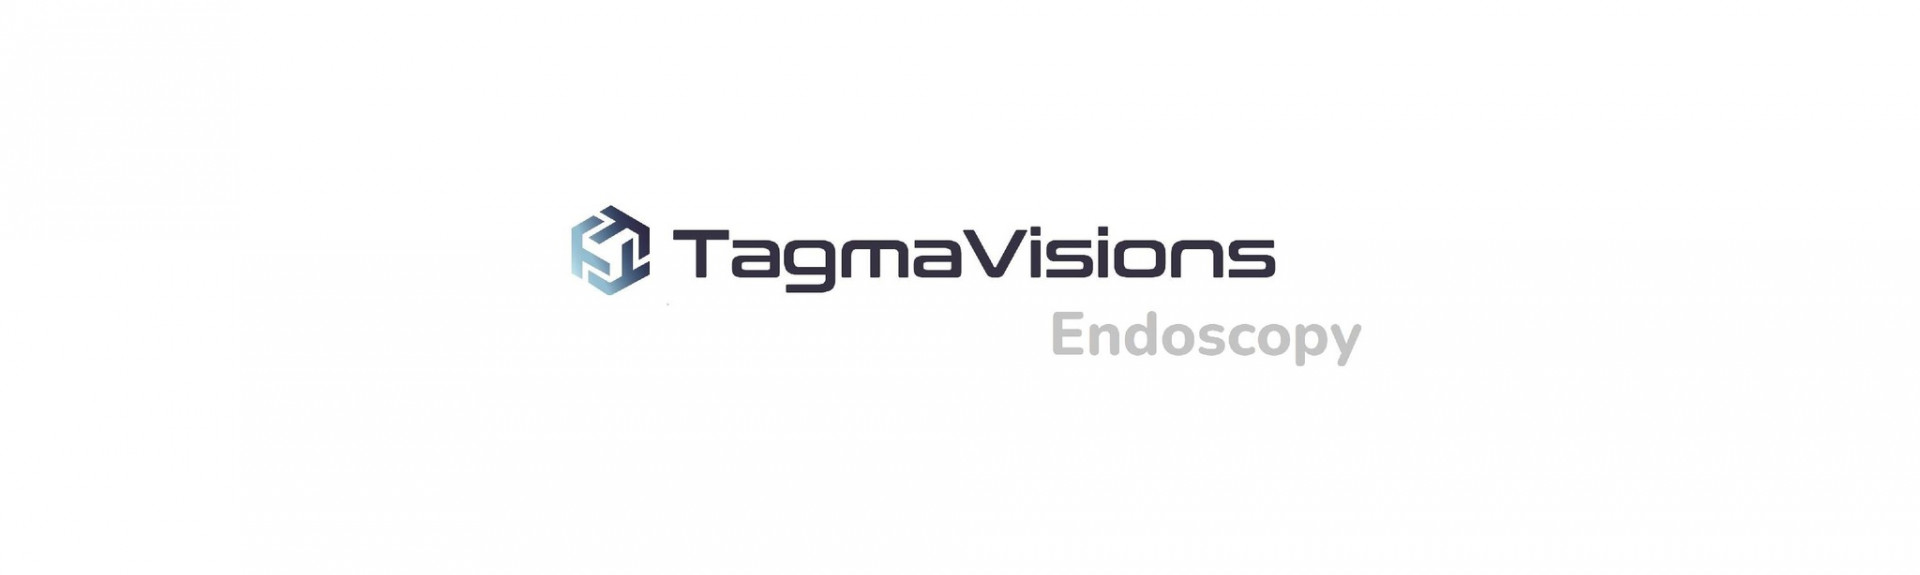 TagmaQuest Endoscopy